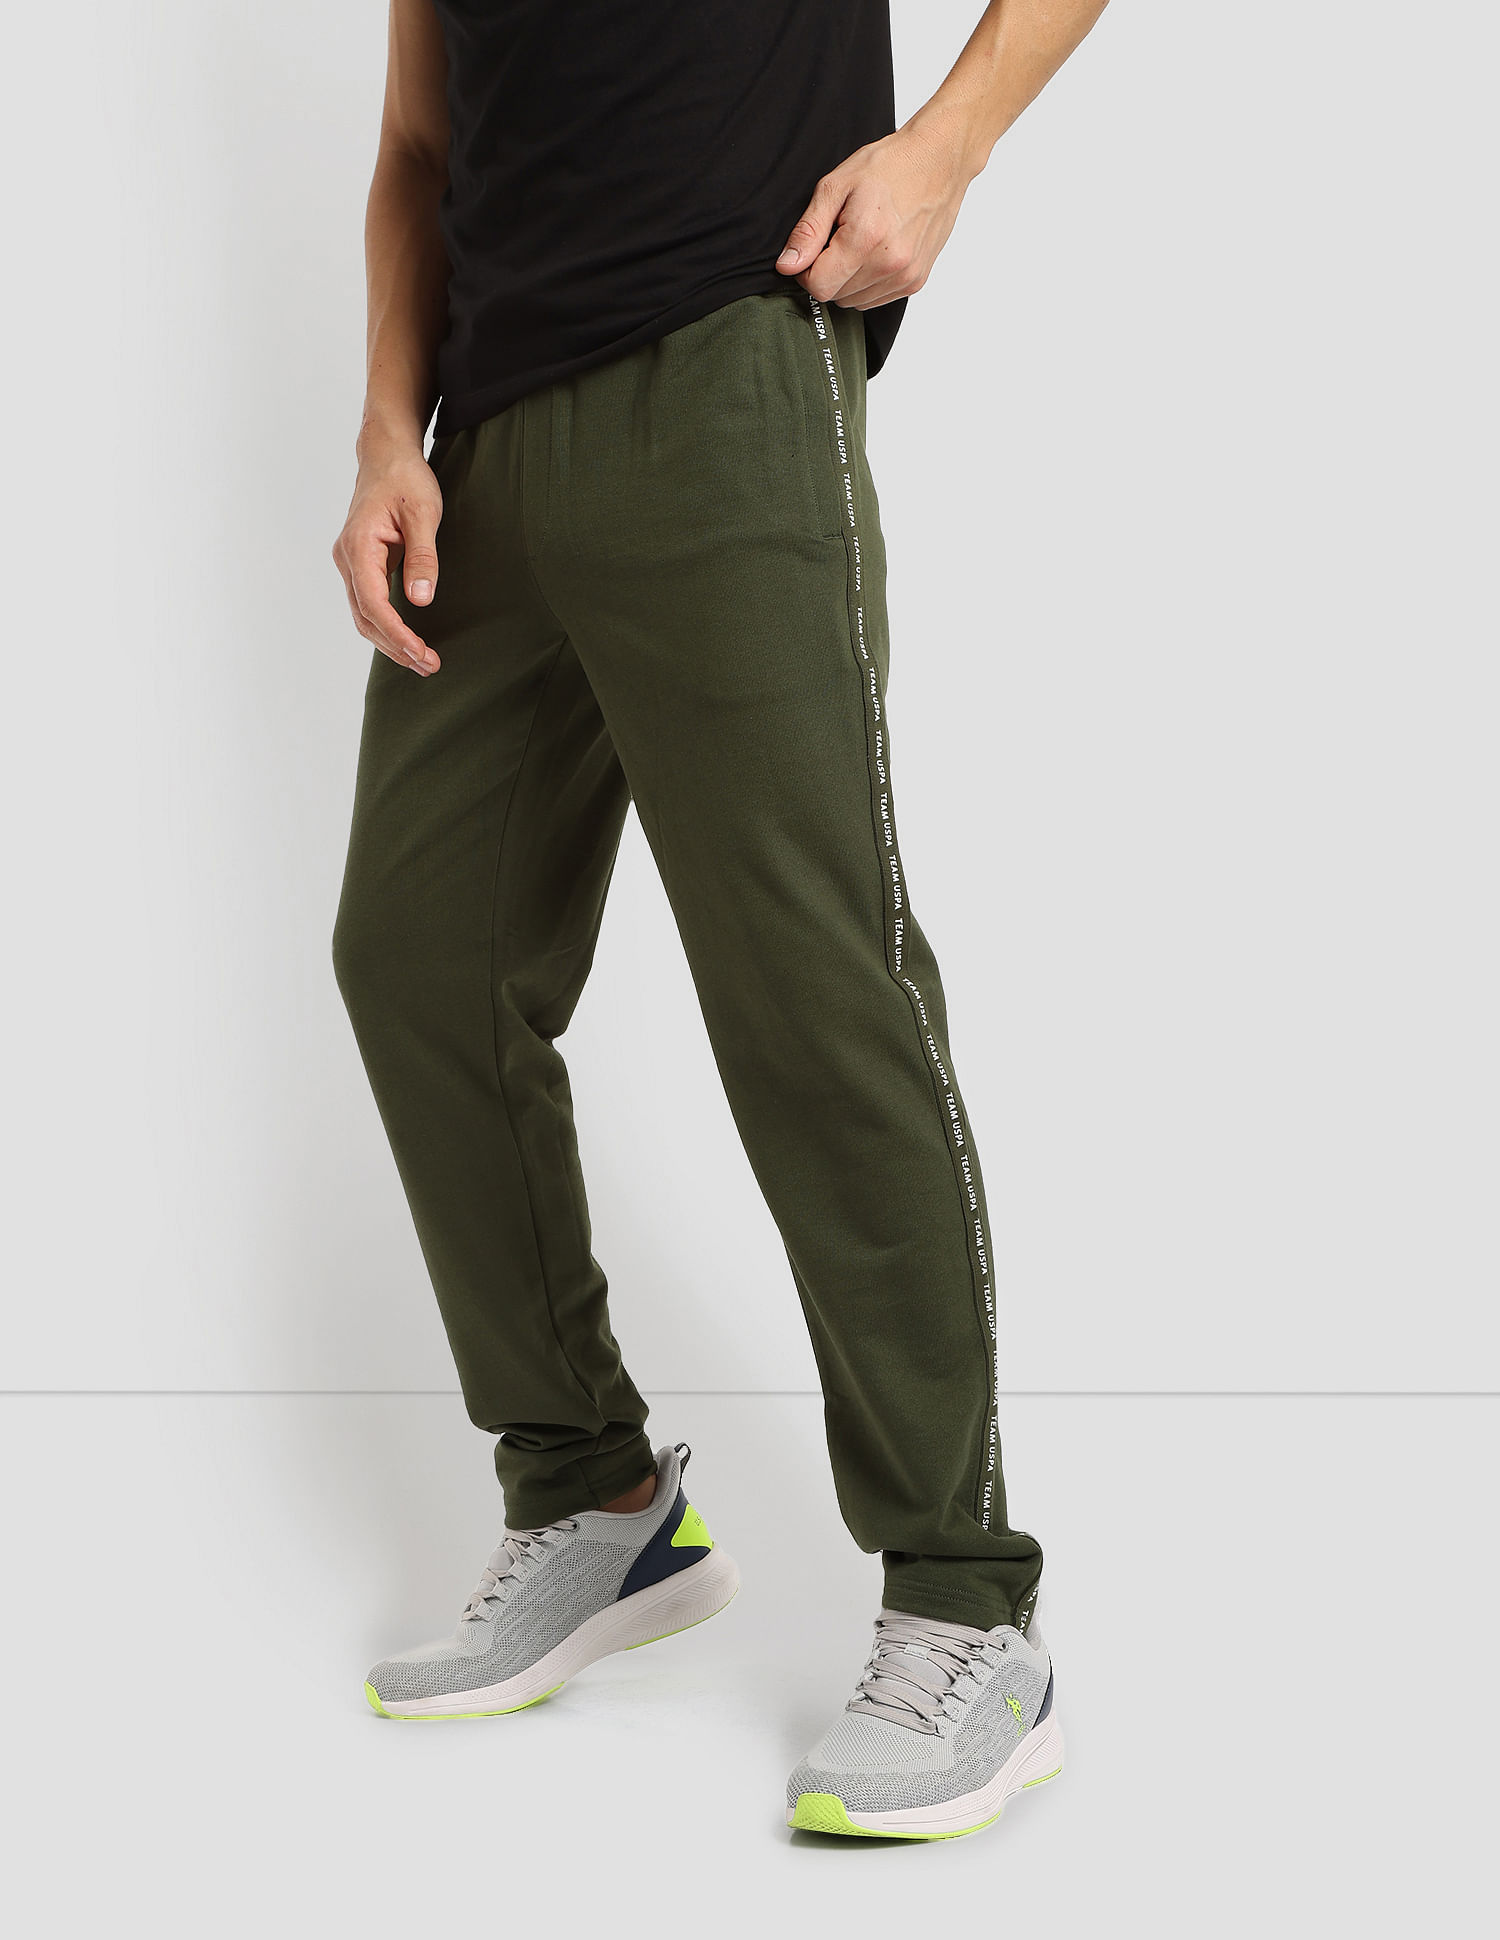 Buy adidas x Human Made Denim Track Pants 'Collegiate Navy' - GM4185 | GOAT